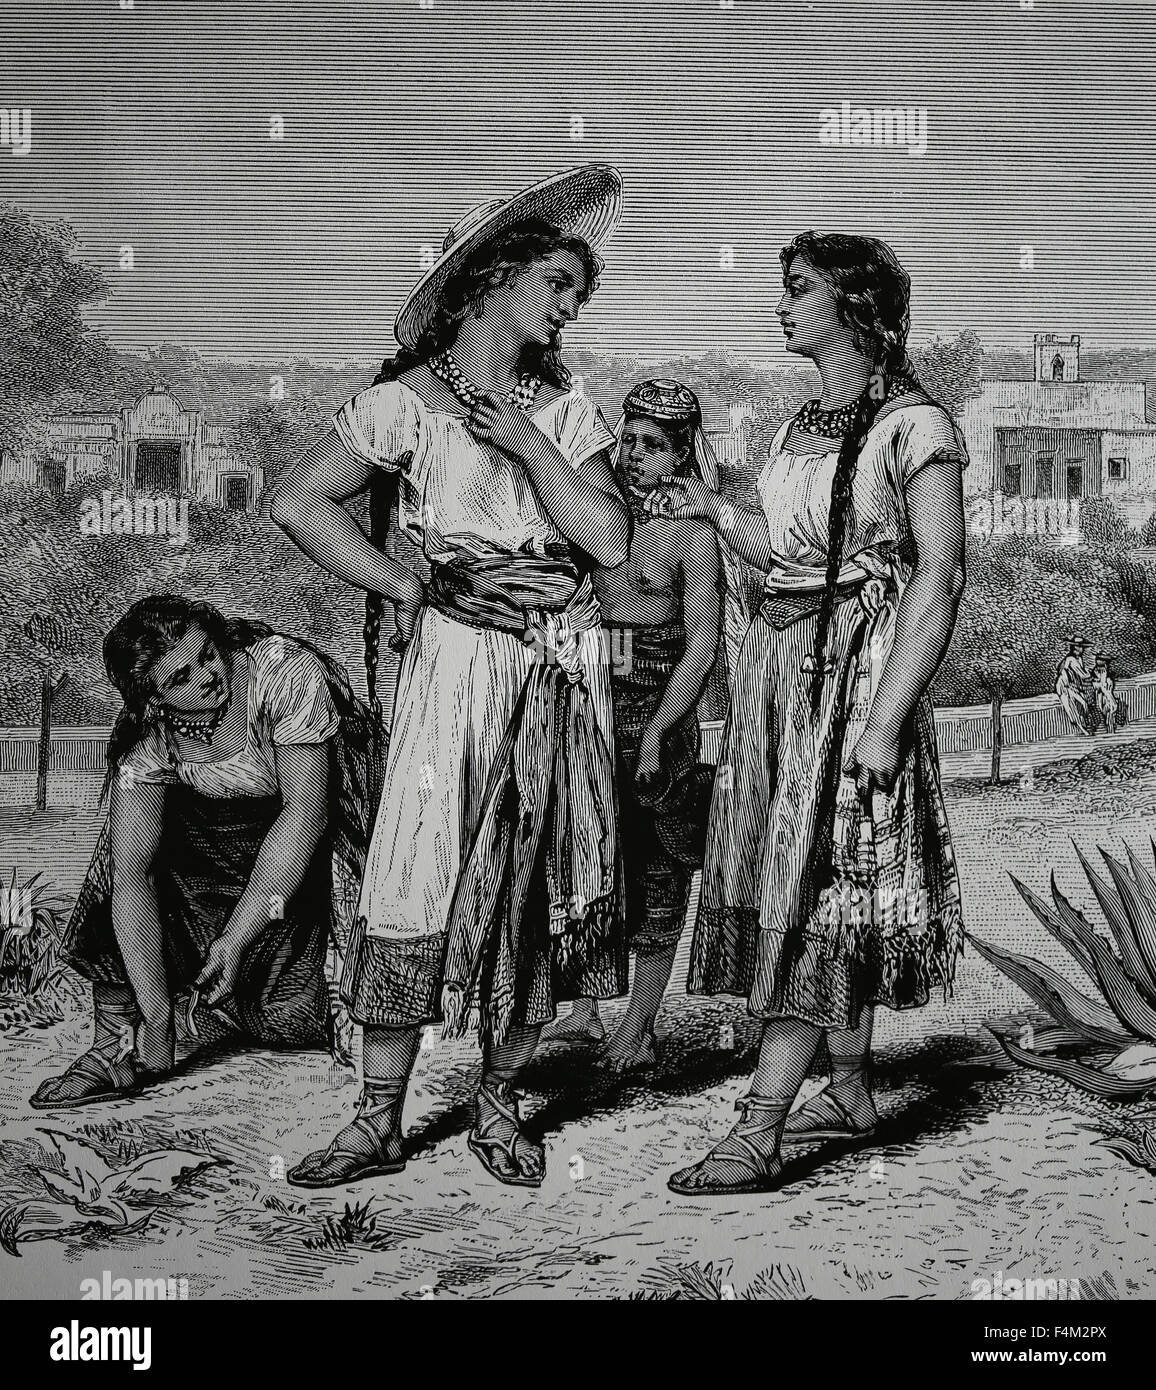 América. México. Chiapas. Las niñas de Tuxtla, c. 1875. Grabado del siglo XIX. Foto de stock